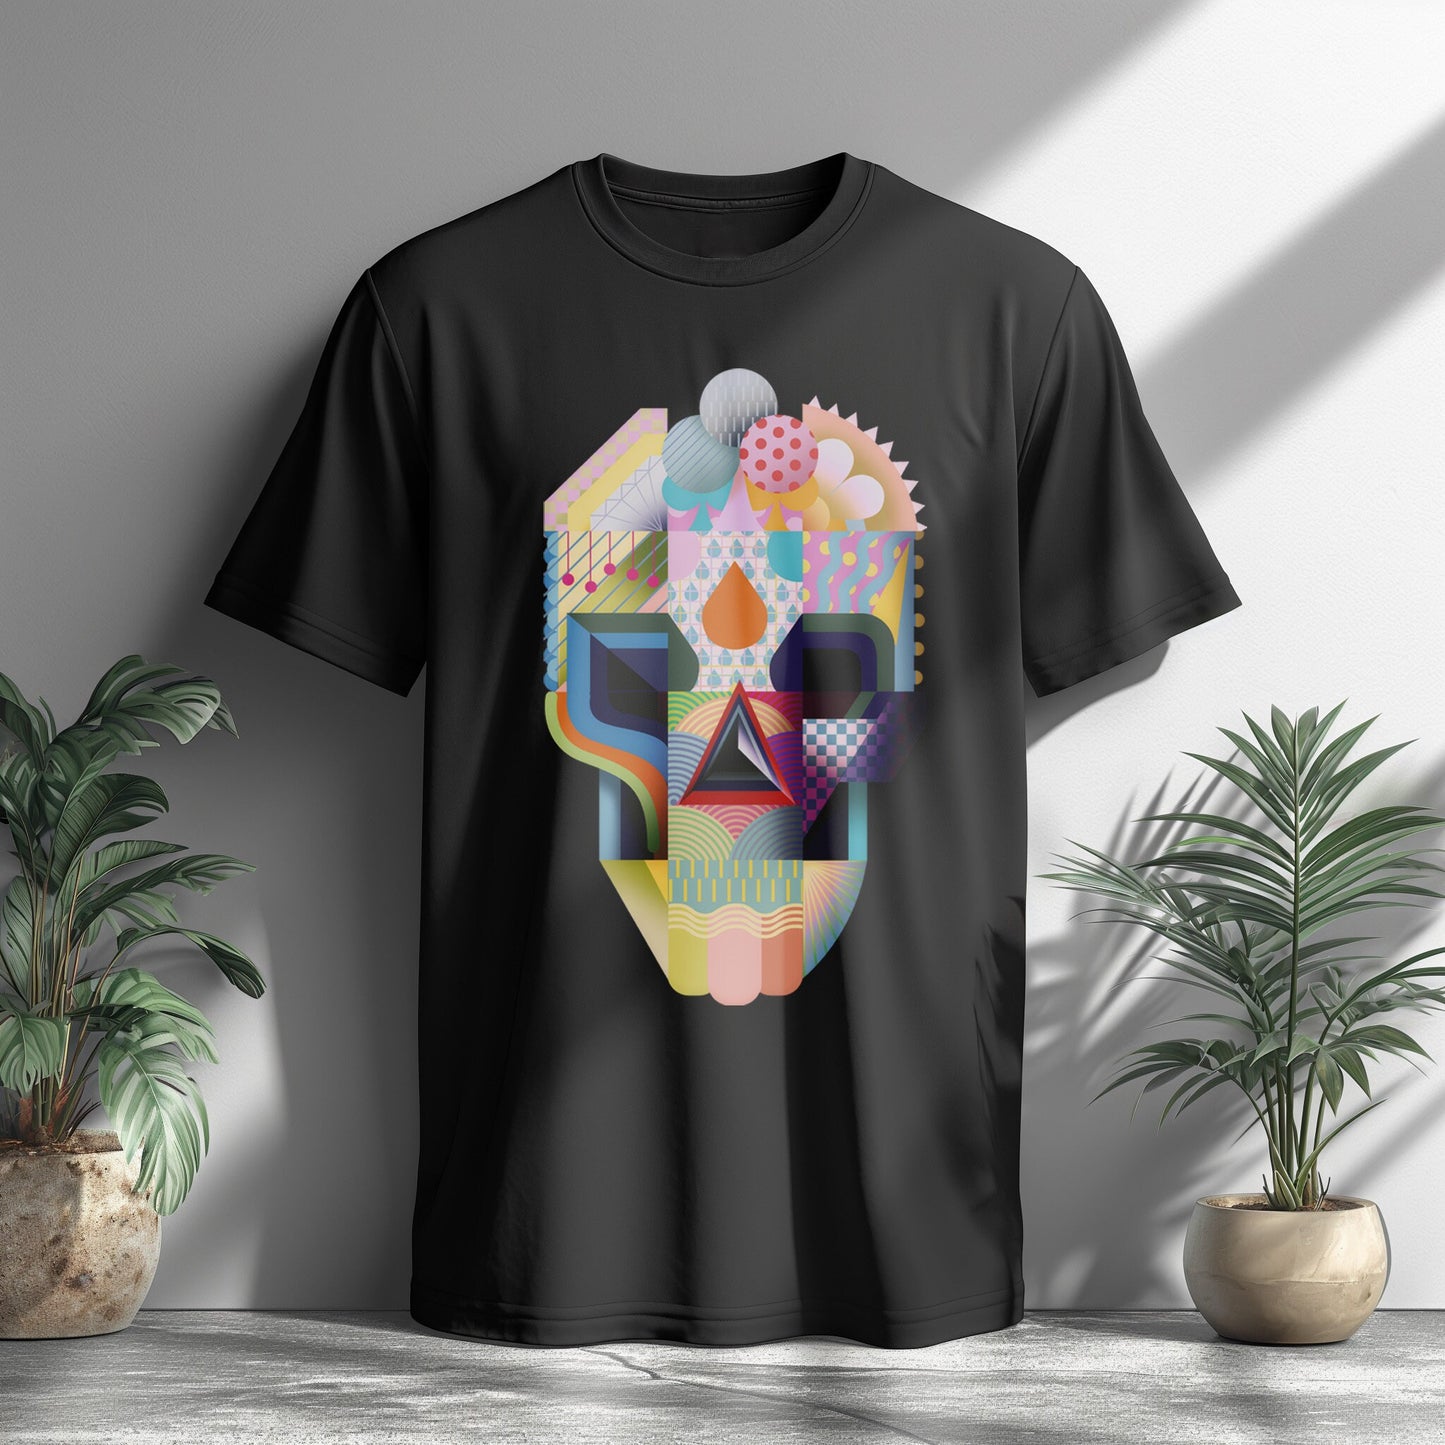 Skull Graphic Men's T shirt, Skull Printed Shirt Gift For Him, Bella Canvas Skull Art Graphic Tee Gift